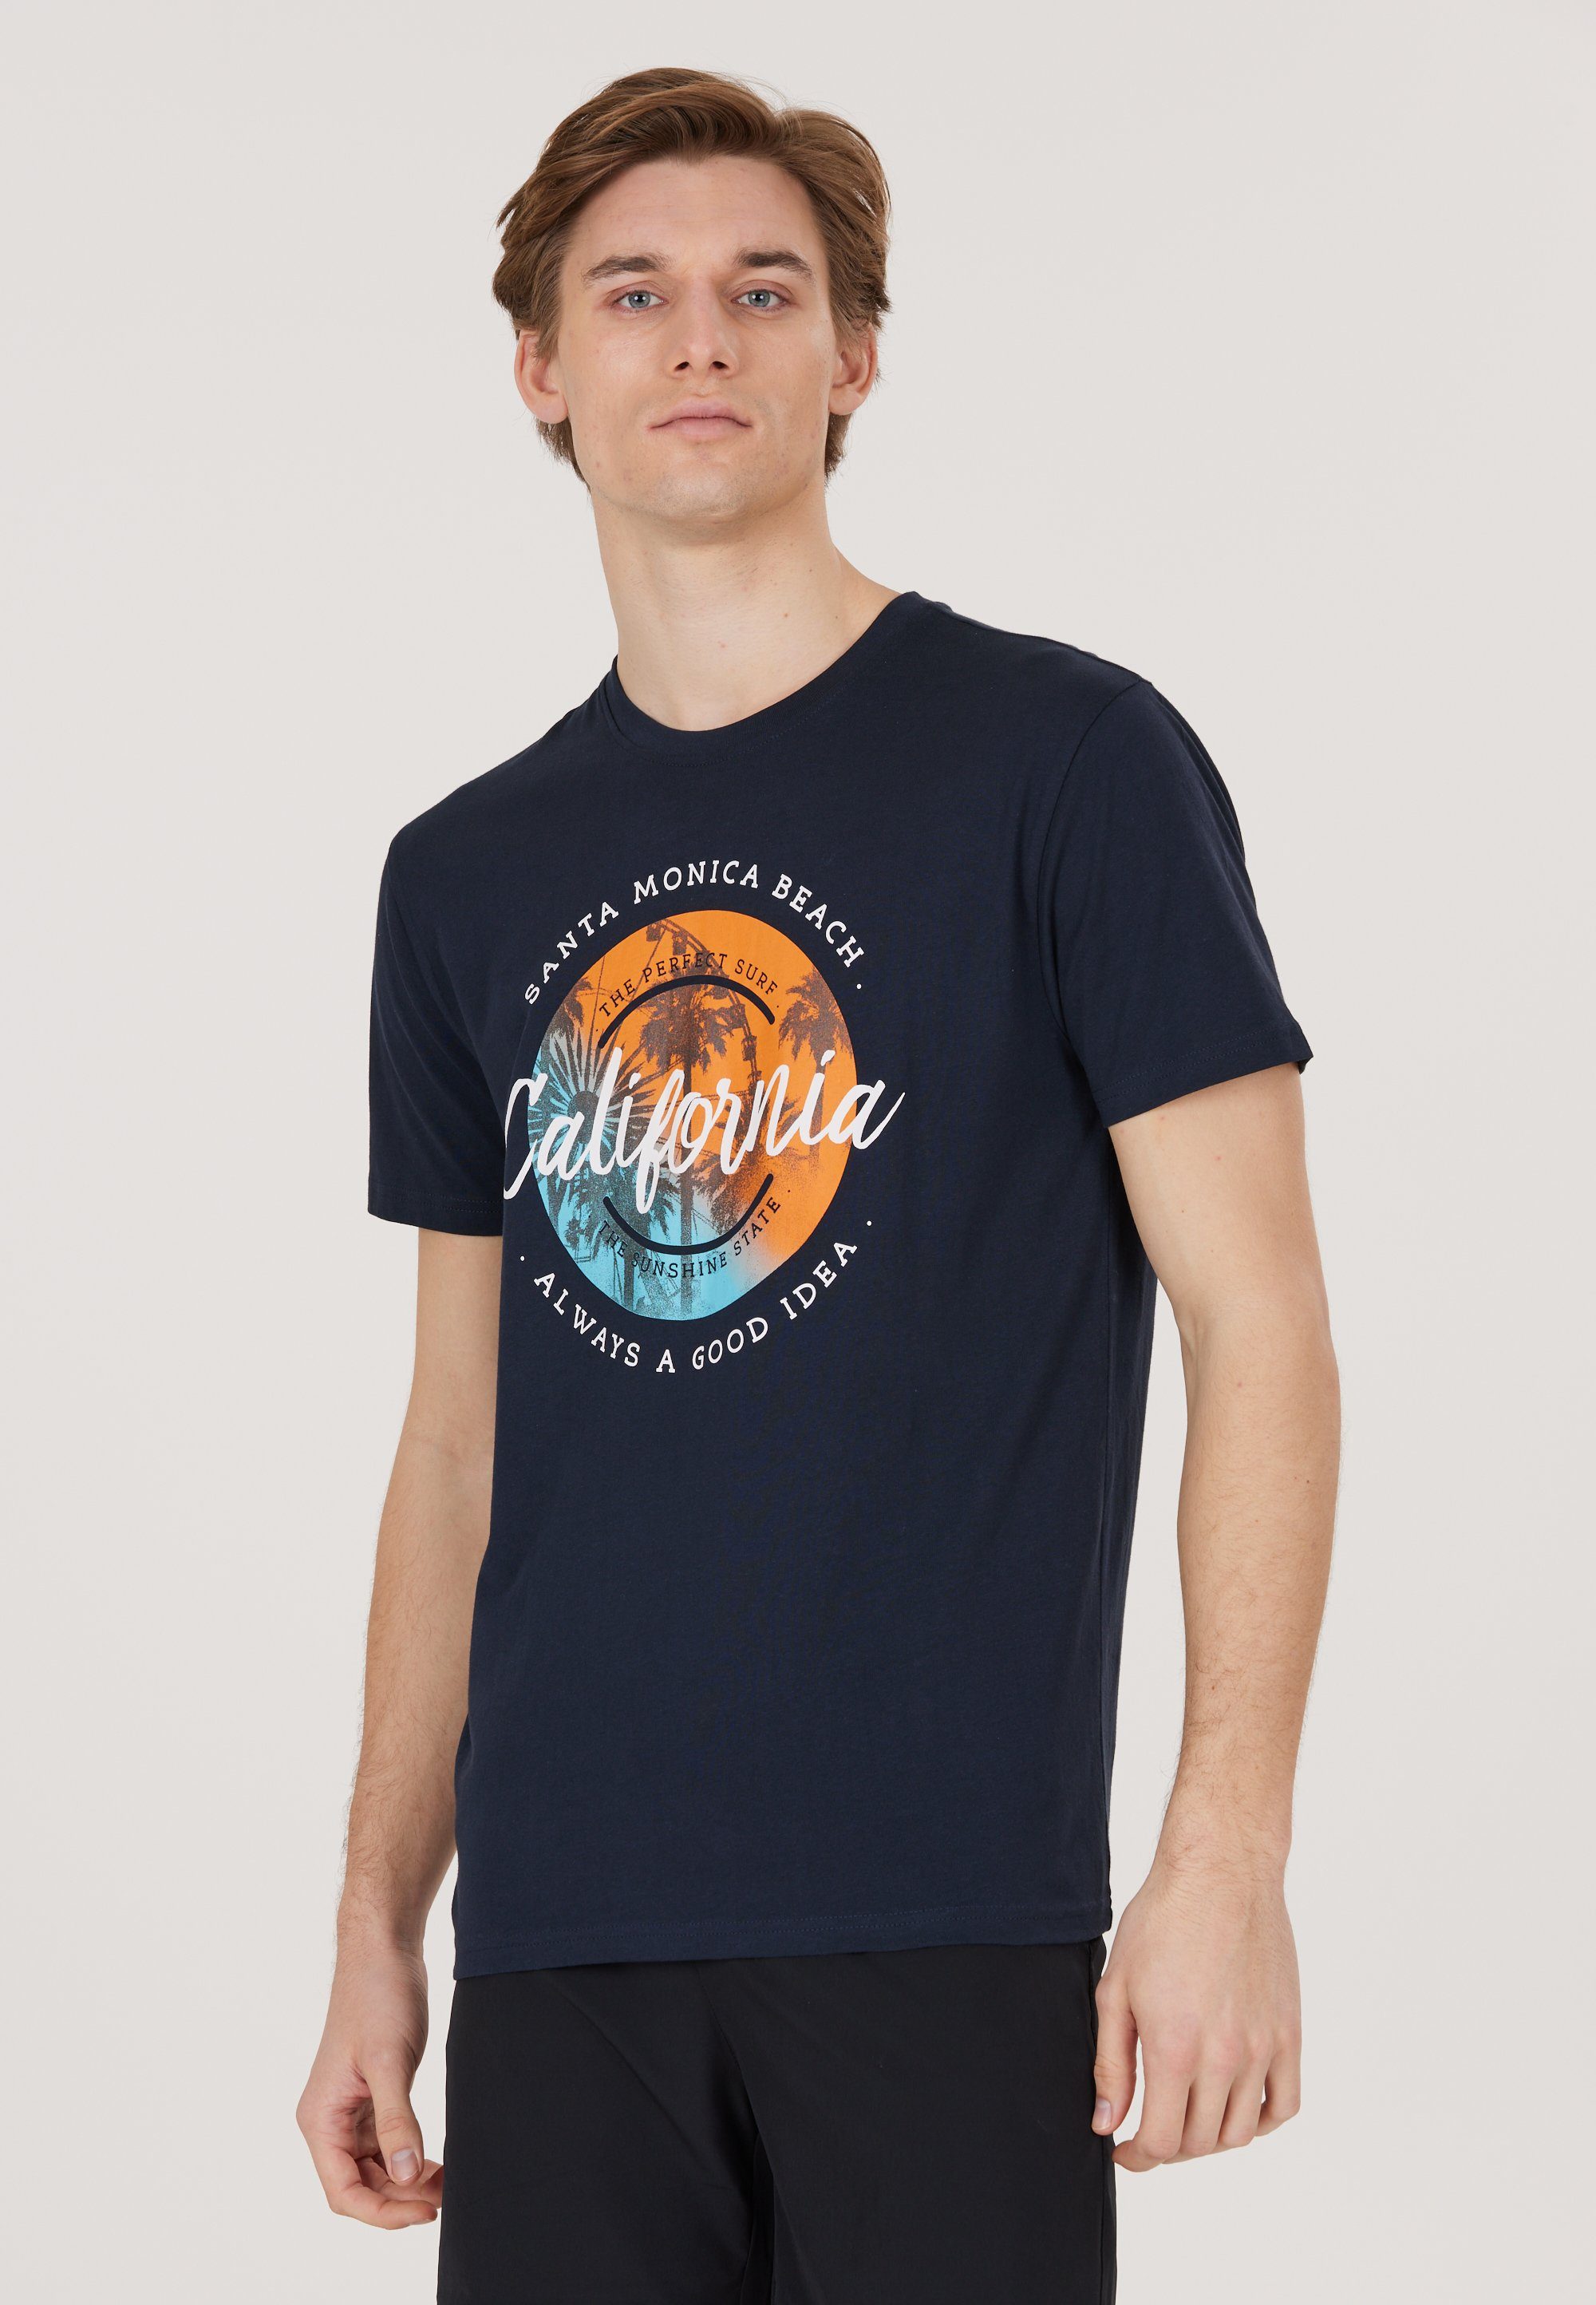 CRUZ T-Shirt Edmund mit coolem Print dunkelblau